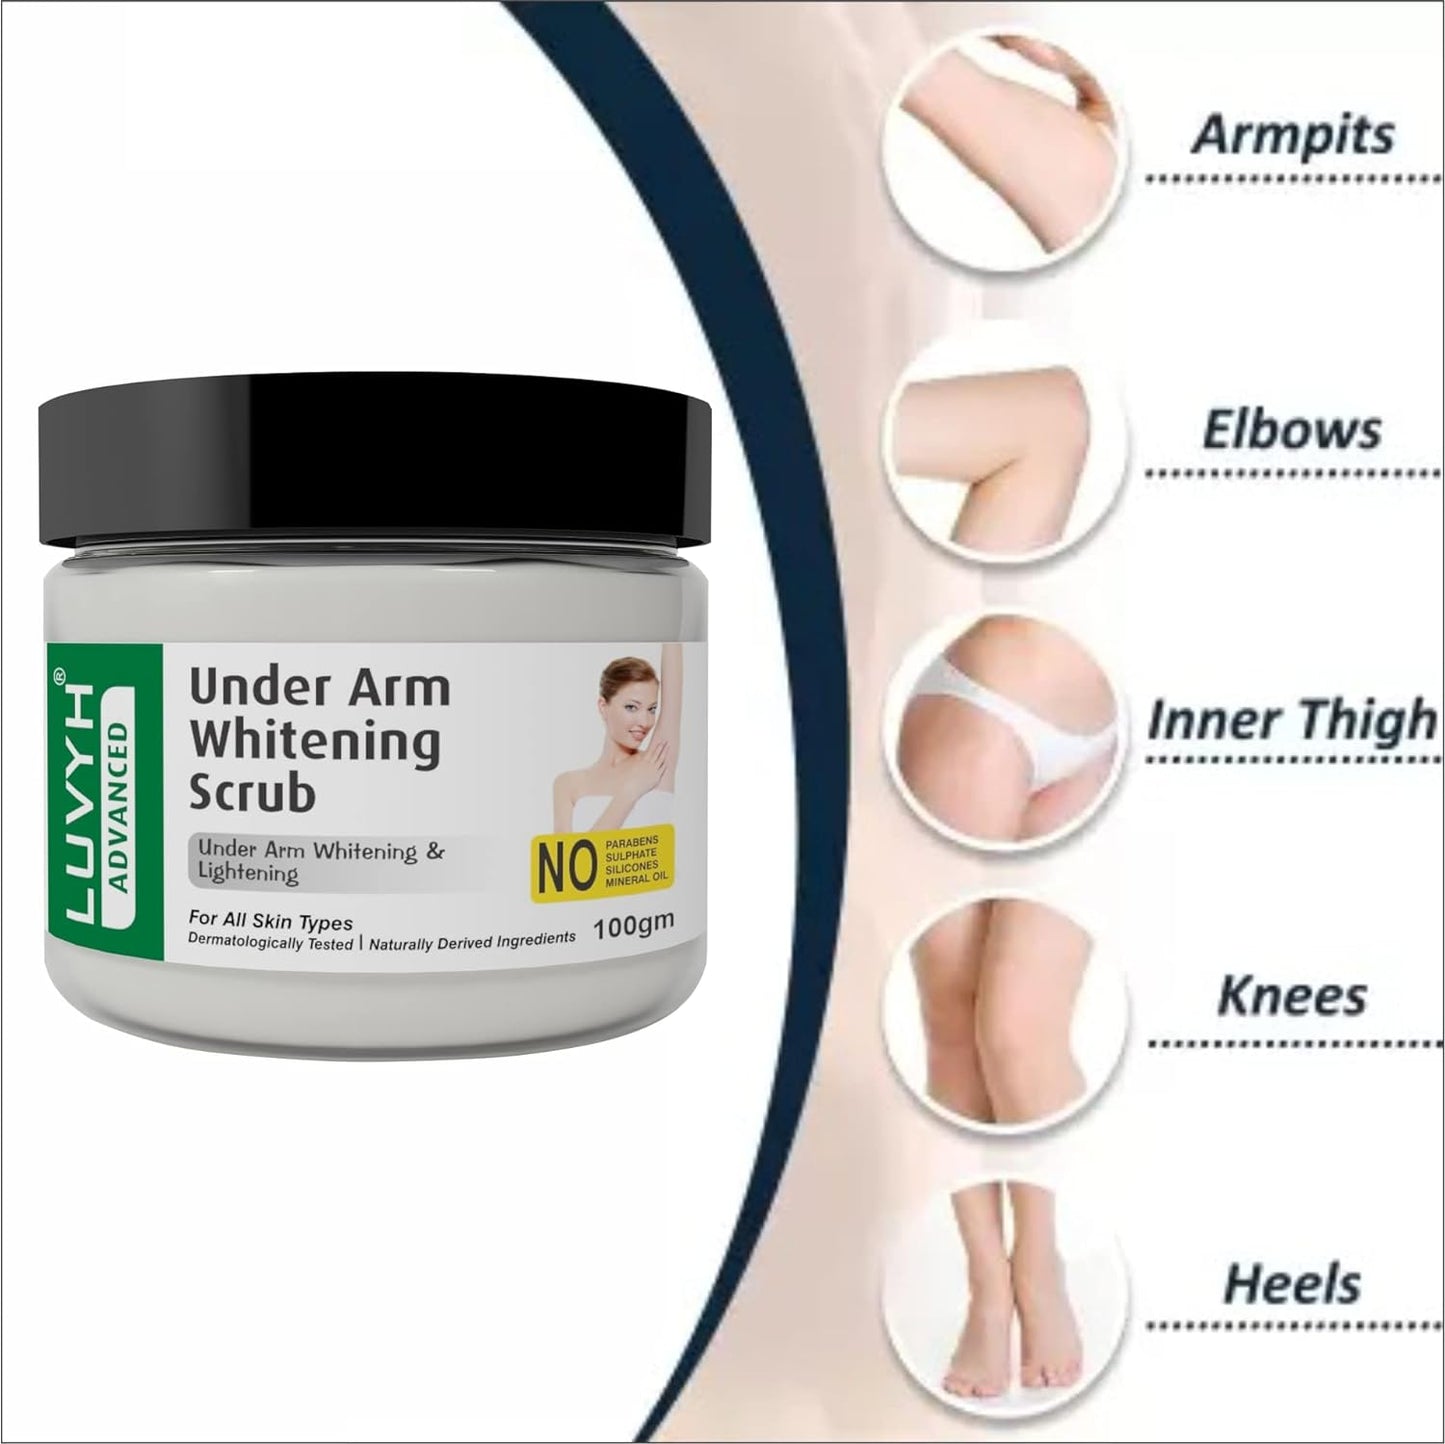  Under Arm Whitening Scrub for Armpits, elbows, Inner thigh, Knees, Heels